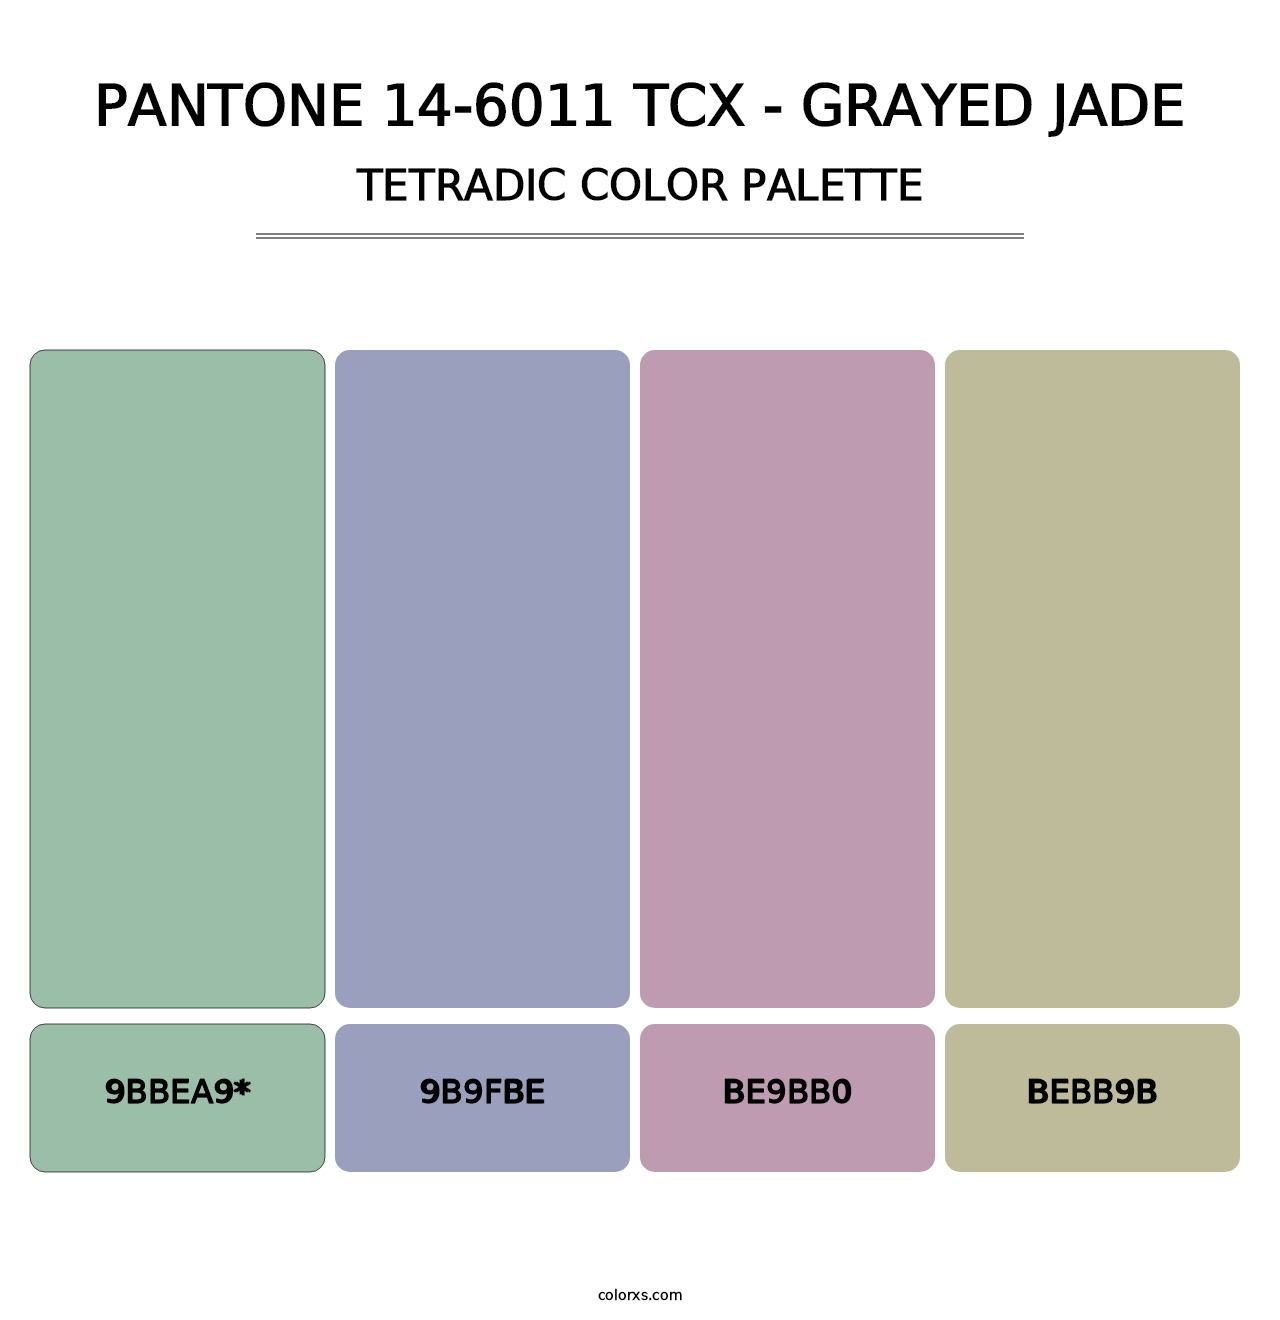 PANTONE 14-6011 TCX - Grayed Jade - Tetradic Color Palette